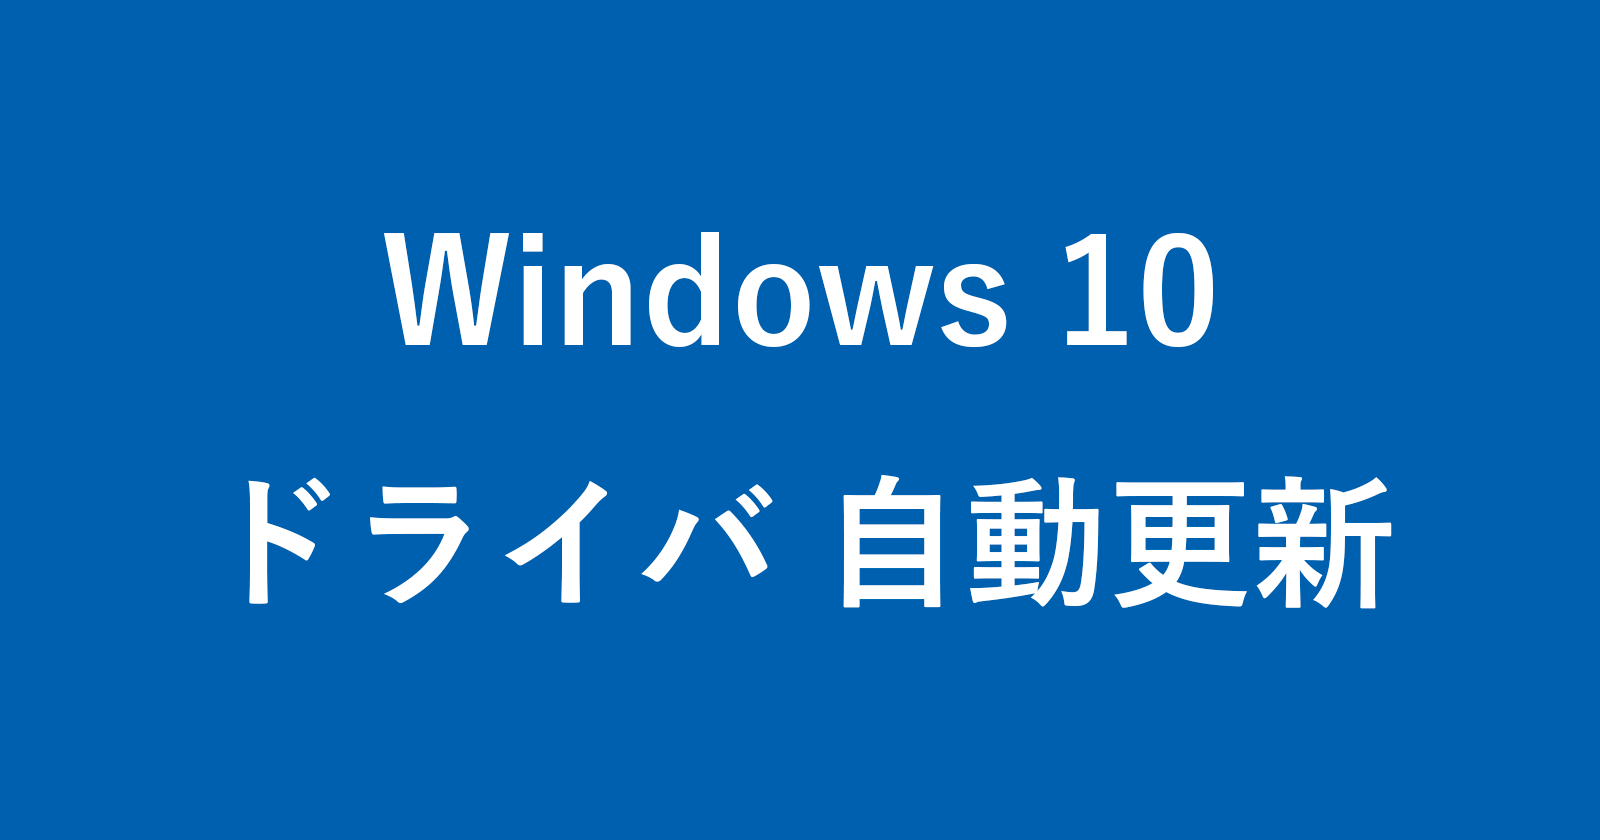 windows 10 driver update